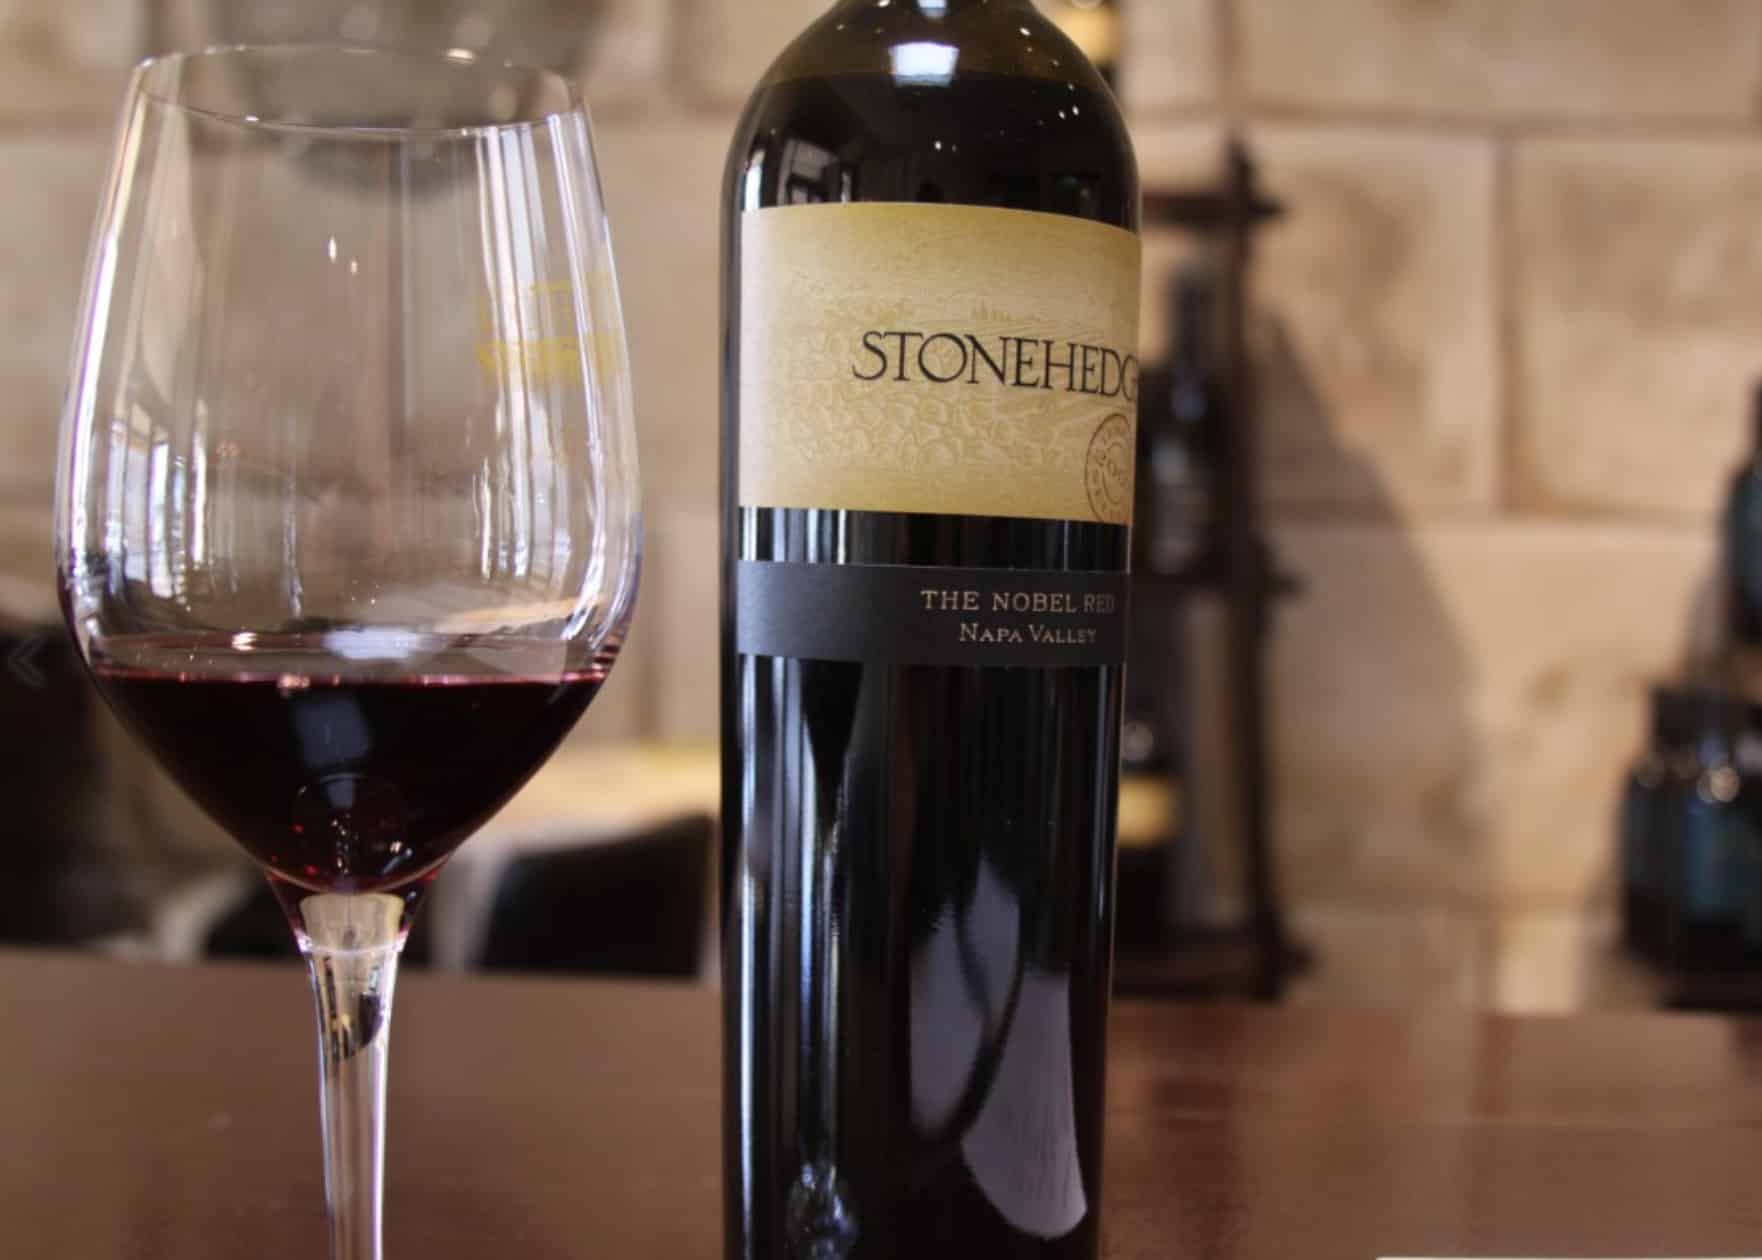 Stonehedge Winery